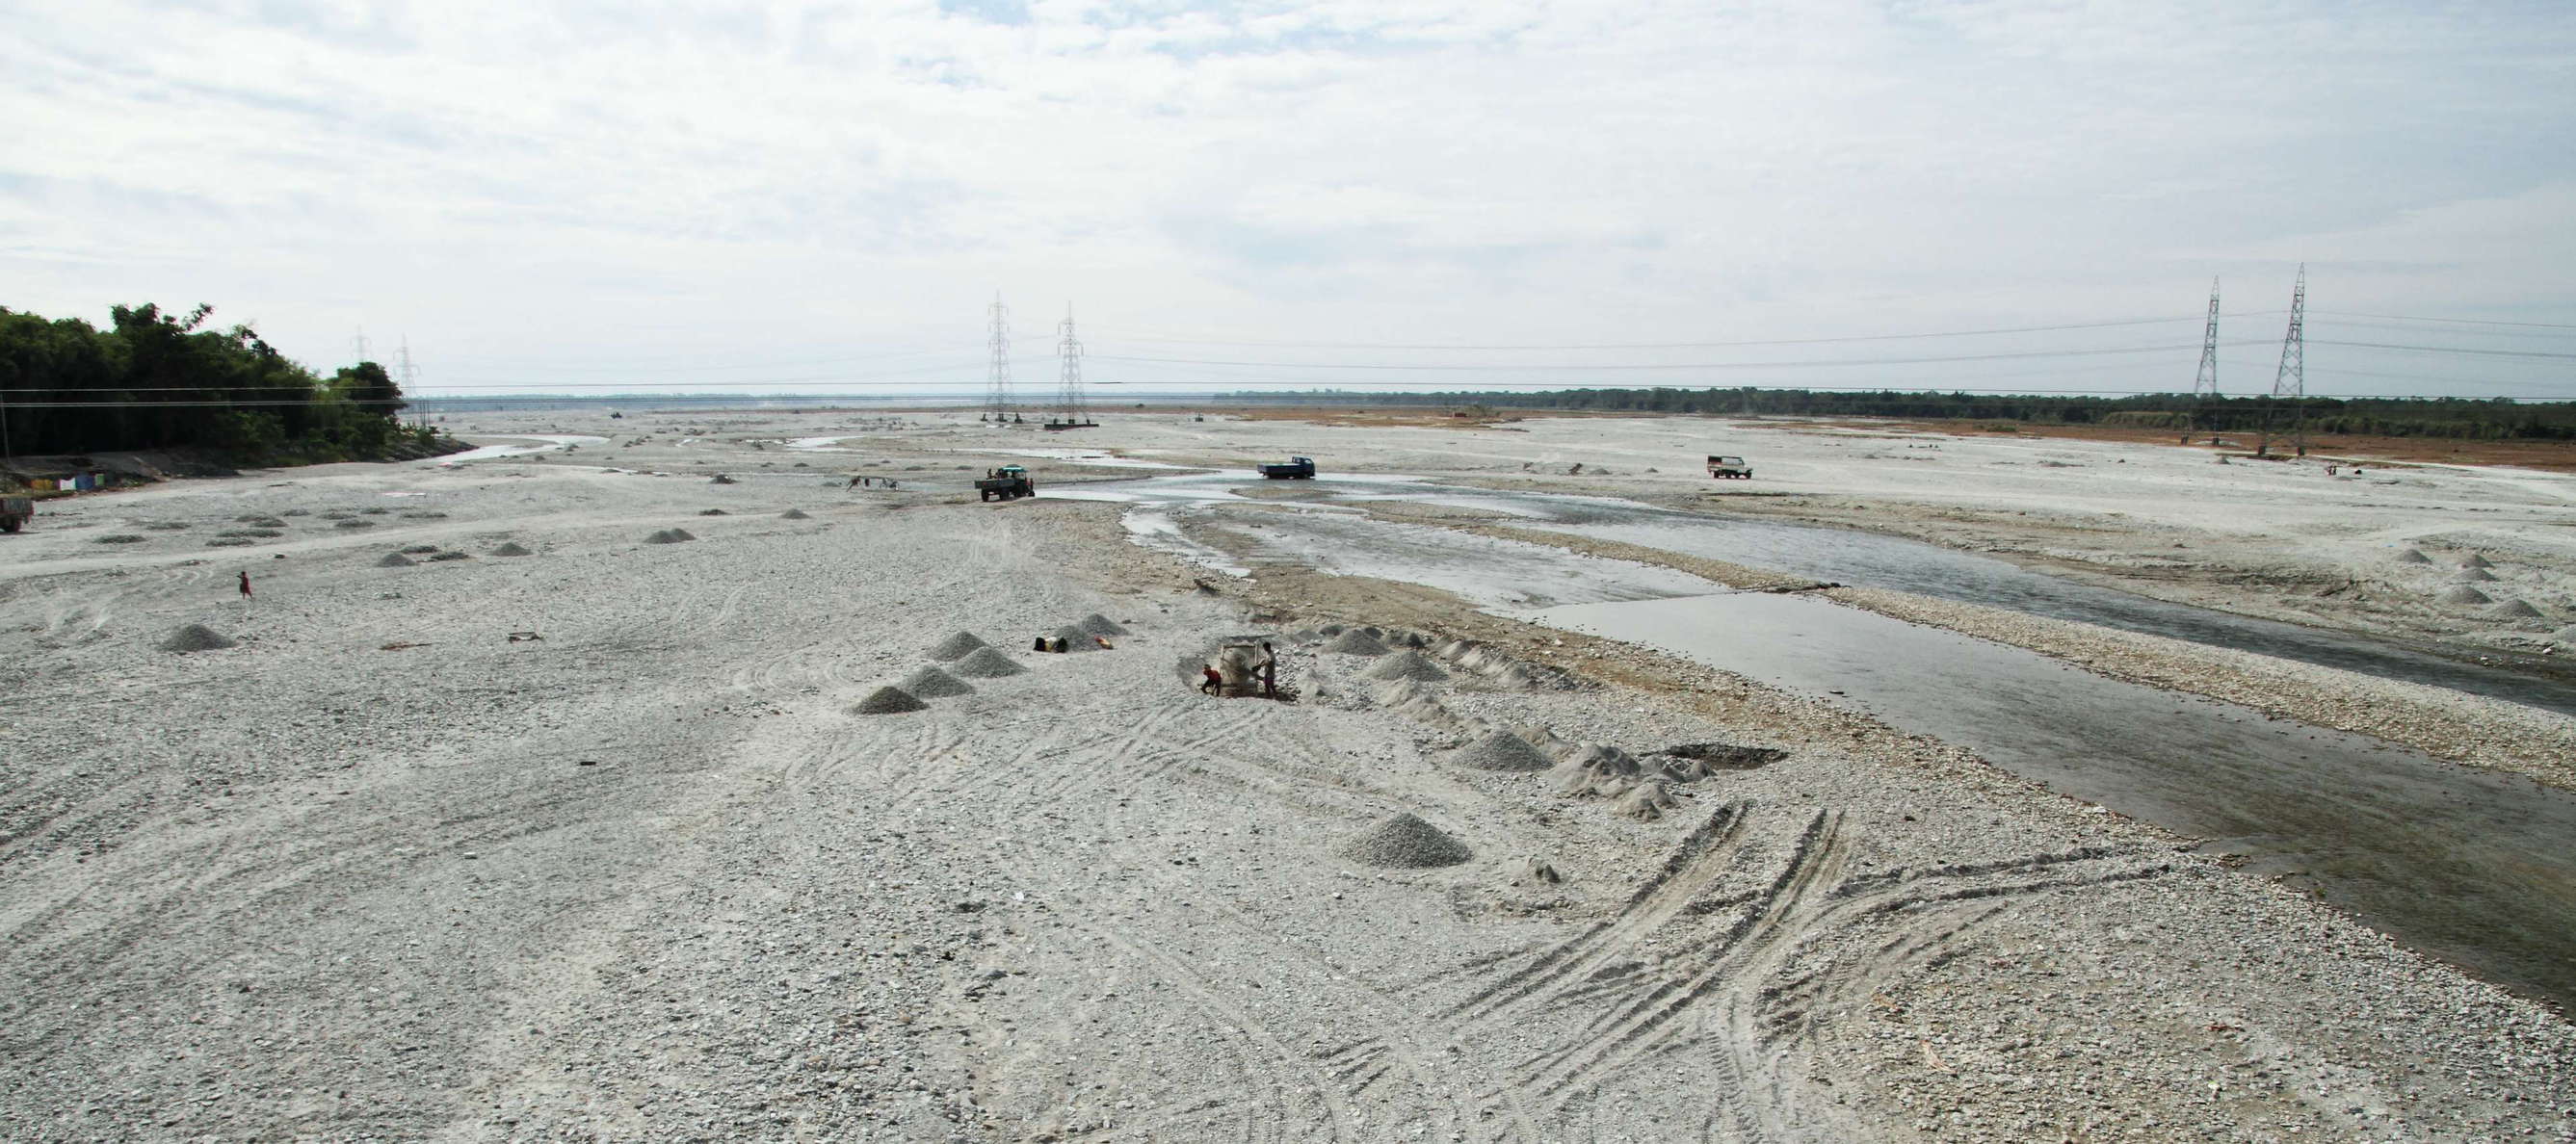 Gish River  |  Floodplain with sediment mining